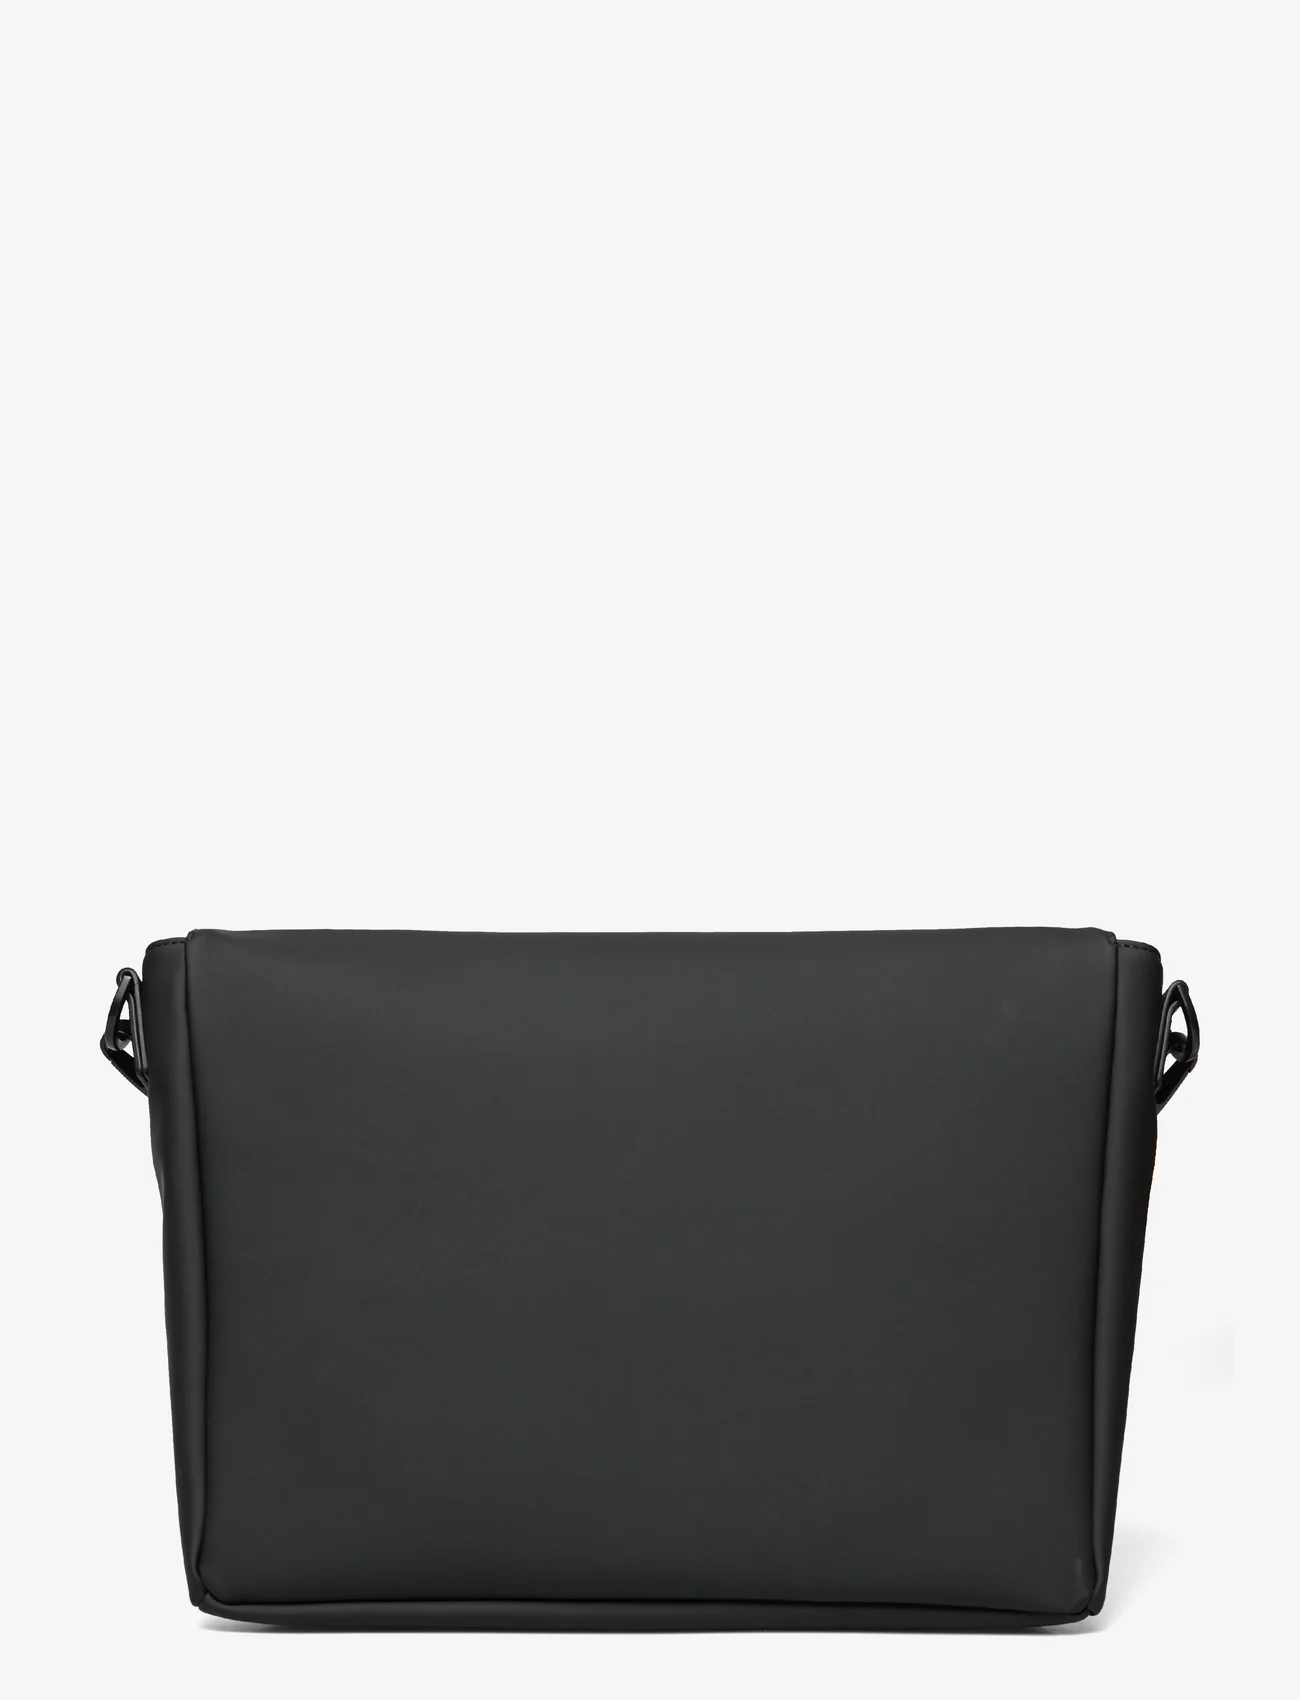 Emporio Armani - SHOULDER BAG - torby na ramię - nero/logo nero - 1